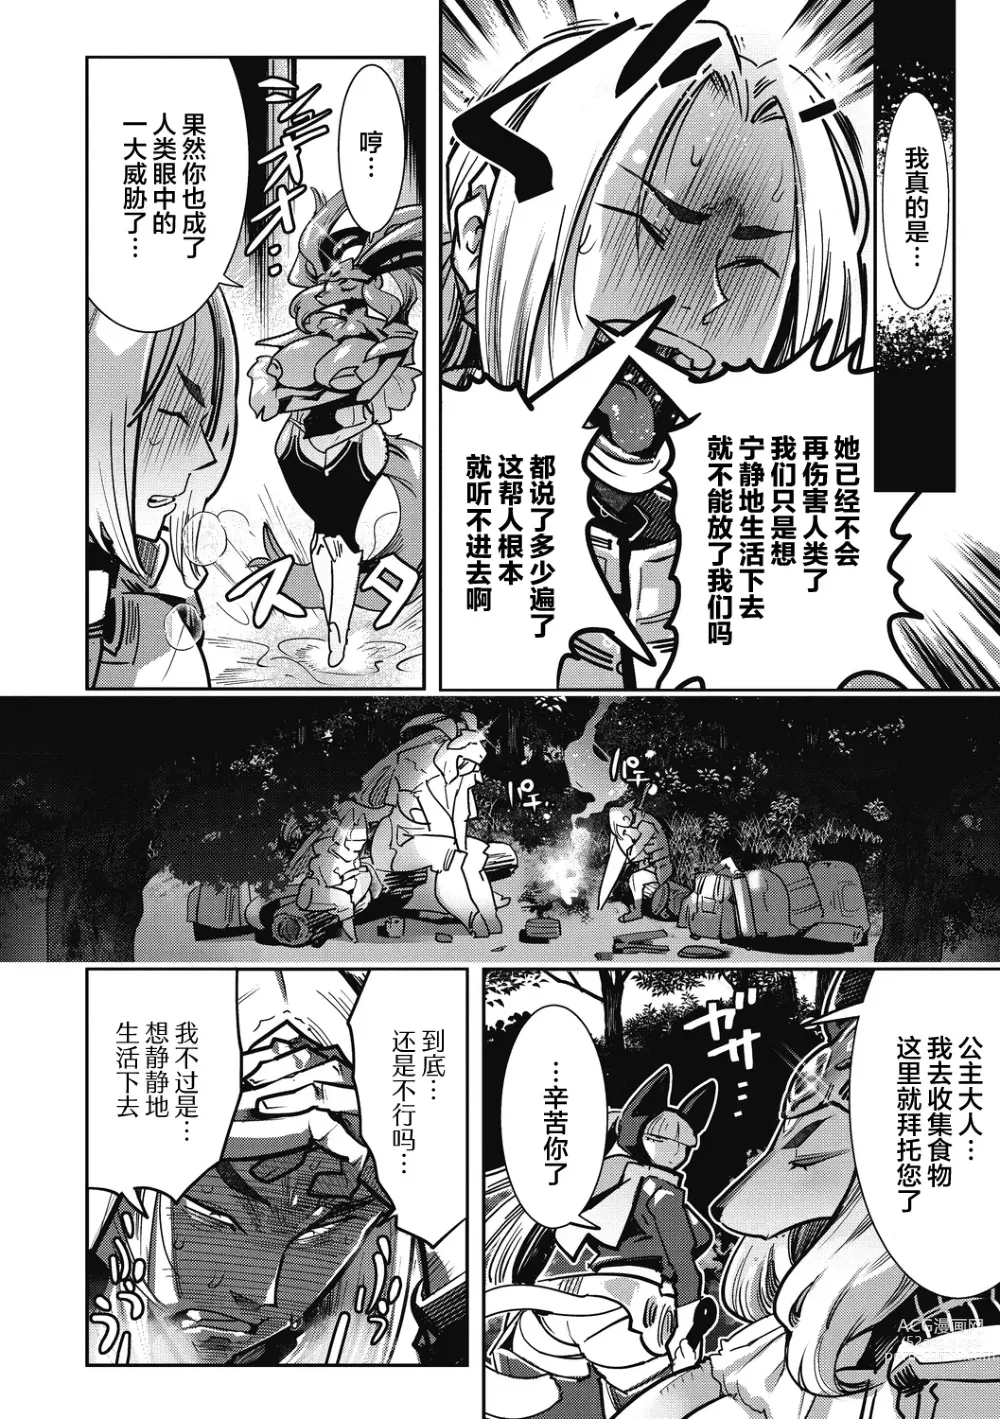 Page 5 of manga Yuusha ha Maou to Koi shitai Saishuuwa